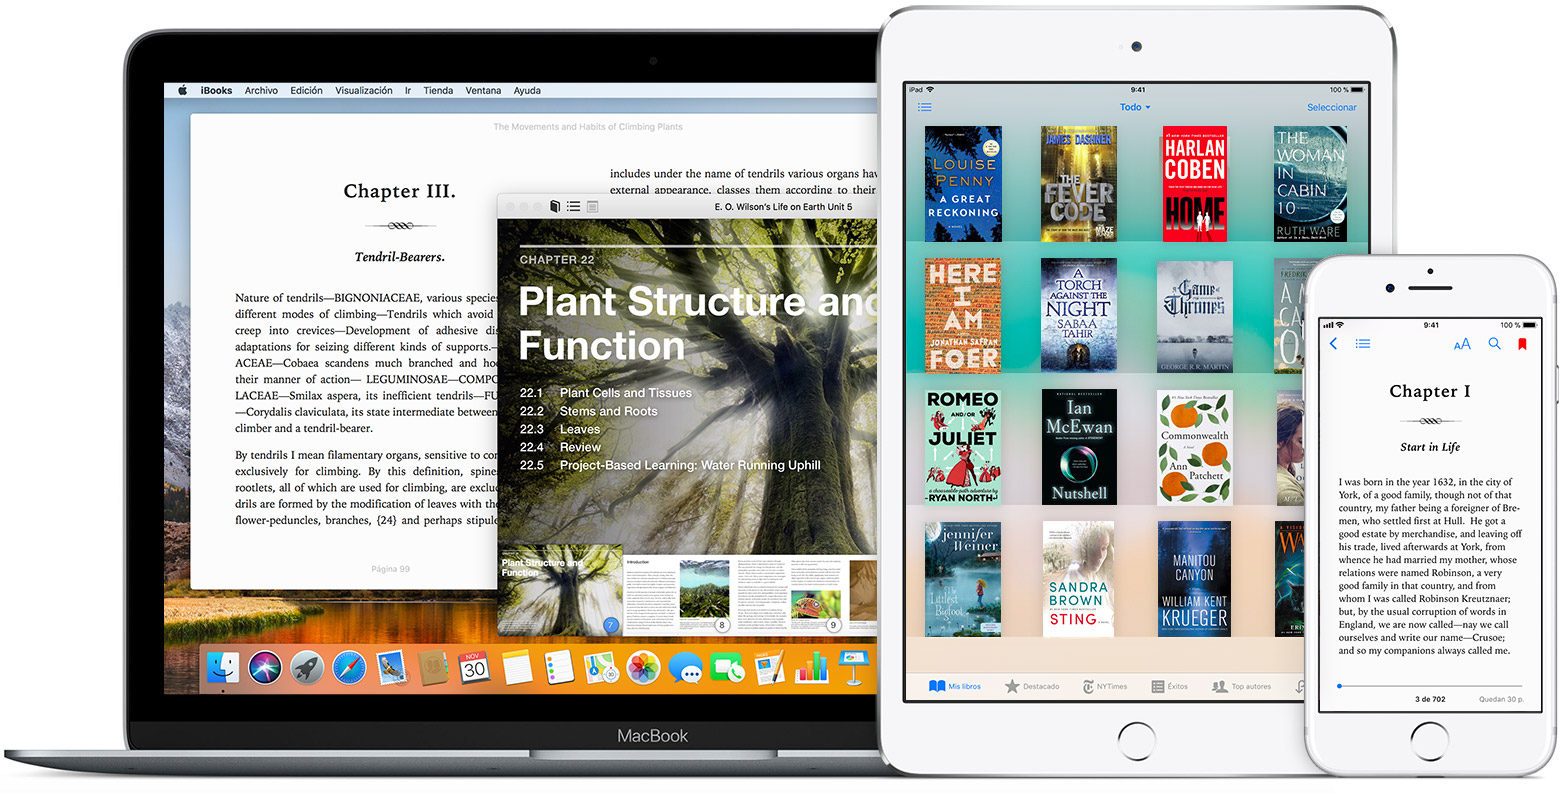 Primeros pasos con iBooks - Soporte técnico de Apple